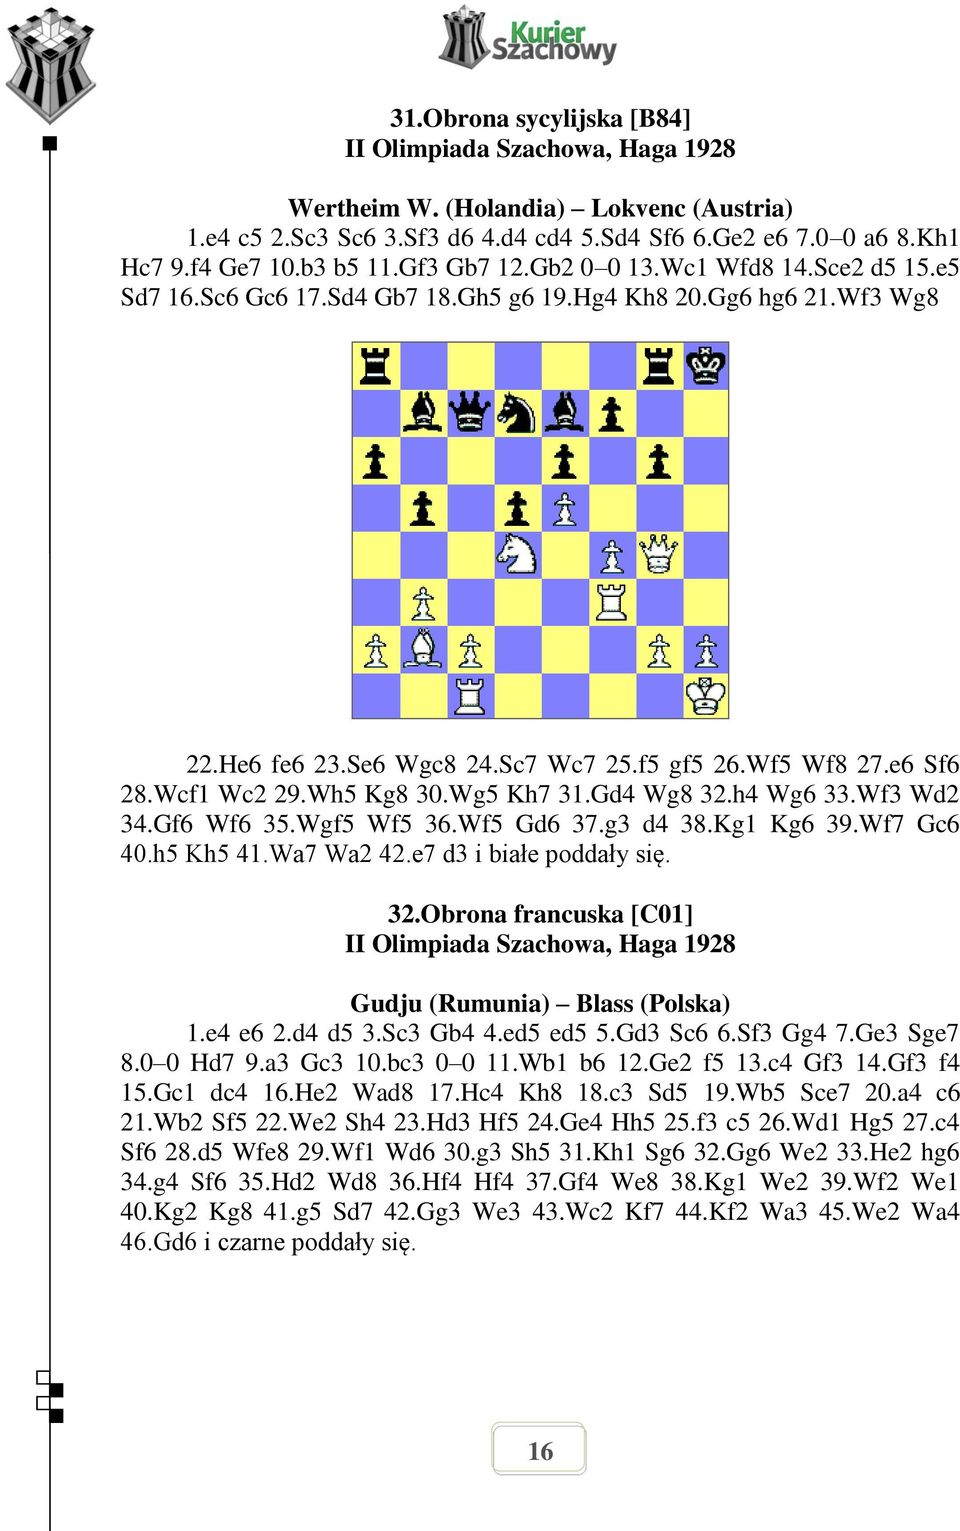 Wh5 Kg8 30.Wg5 Kh7 31.Gd4 Wg8 32.h4 Wg6 33.Wf3 Wd2 34.Gf6 Wf6 35.Wgf5 Wf5 36.Wf5 Gd6 37.g3 d4 38.Kg1 Kg6 39.Wf7 Gc6 40.h5 Kh5 41.Wa7 Wa2 42.e7 d3 i białe poddały się. 32.Obrona francuska [C01] II Olimpiada Szachowa, Haga 1928 Gudju (Rumunia) Blass (Polska) 1.